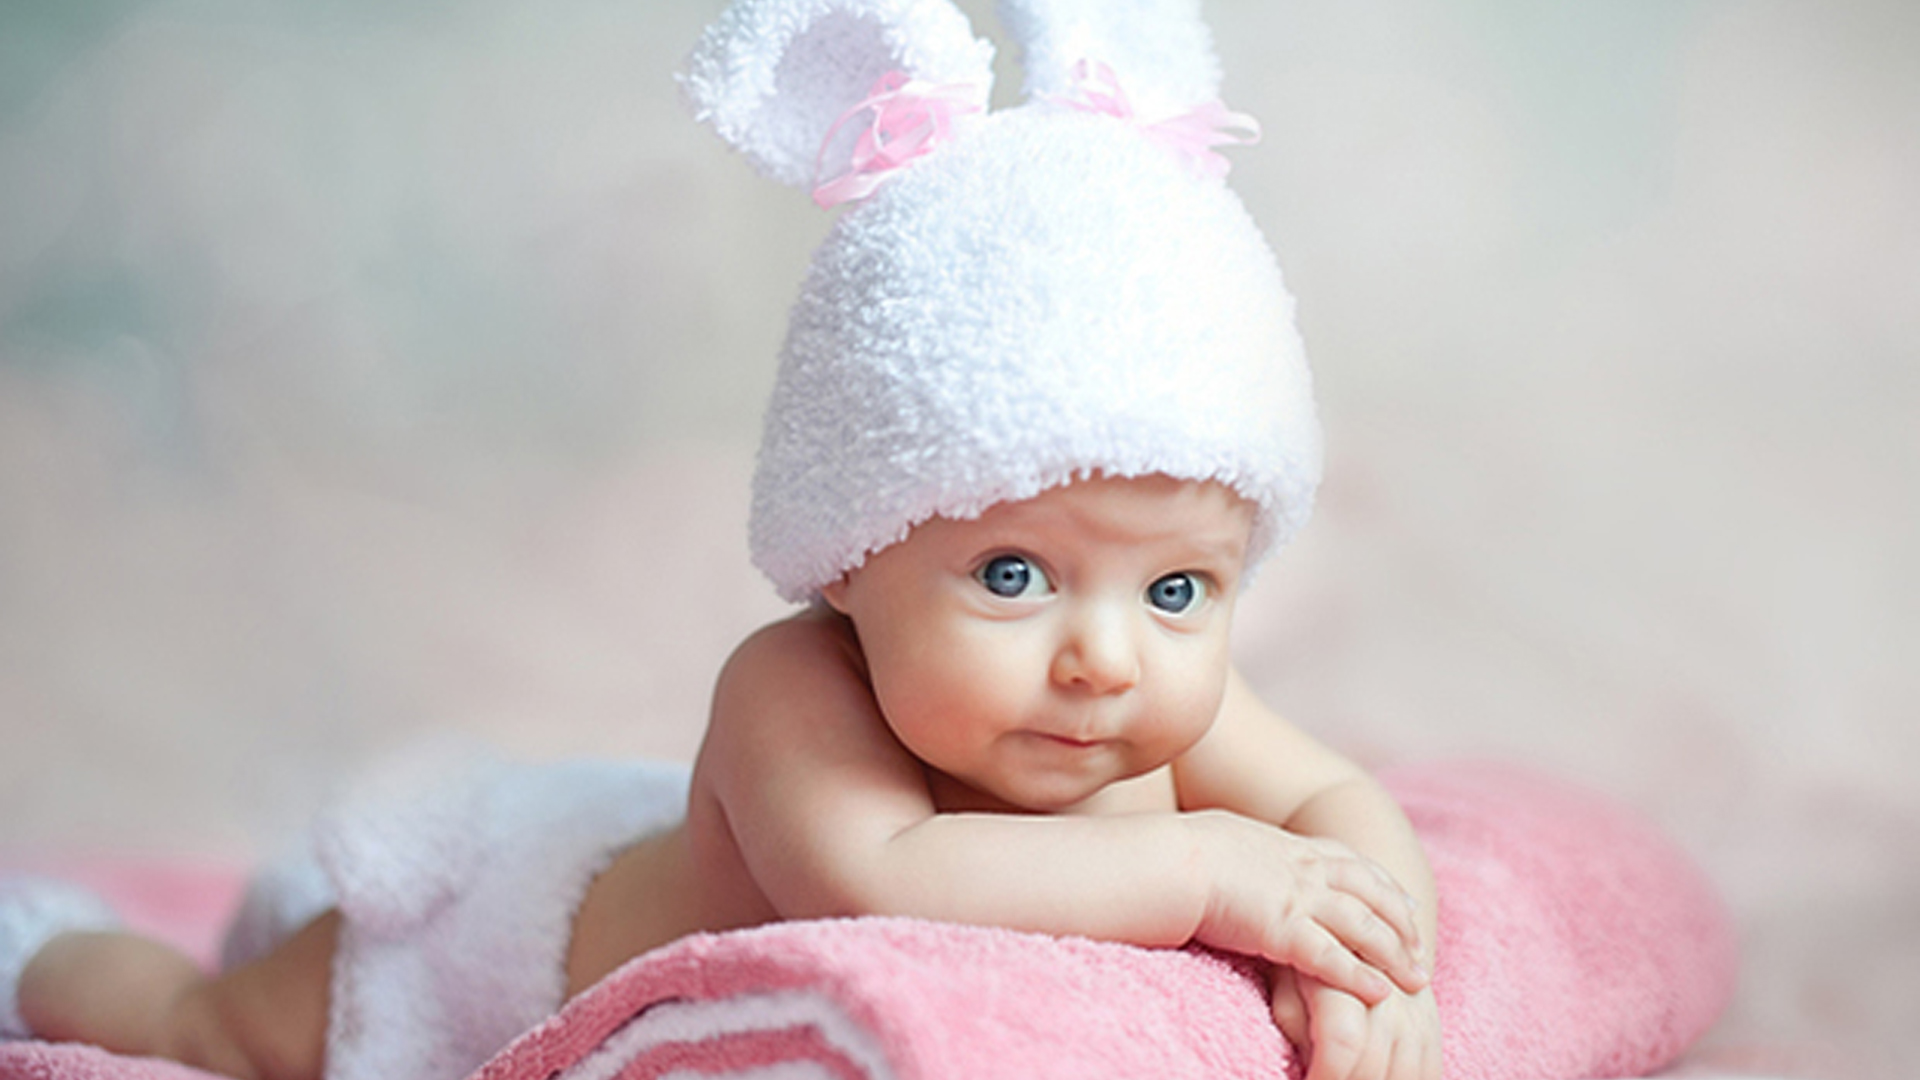 Grey Eyes Cute Toddler Is Lying Down On White Pink Bath Towel Wearing White Woolen Knitted Cap 2K Cute